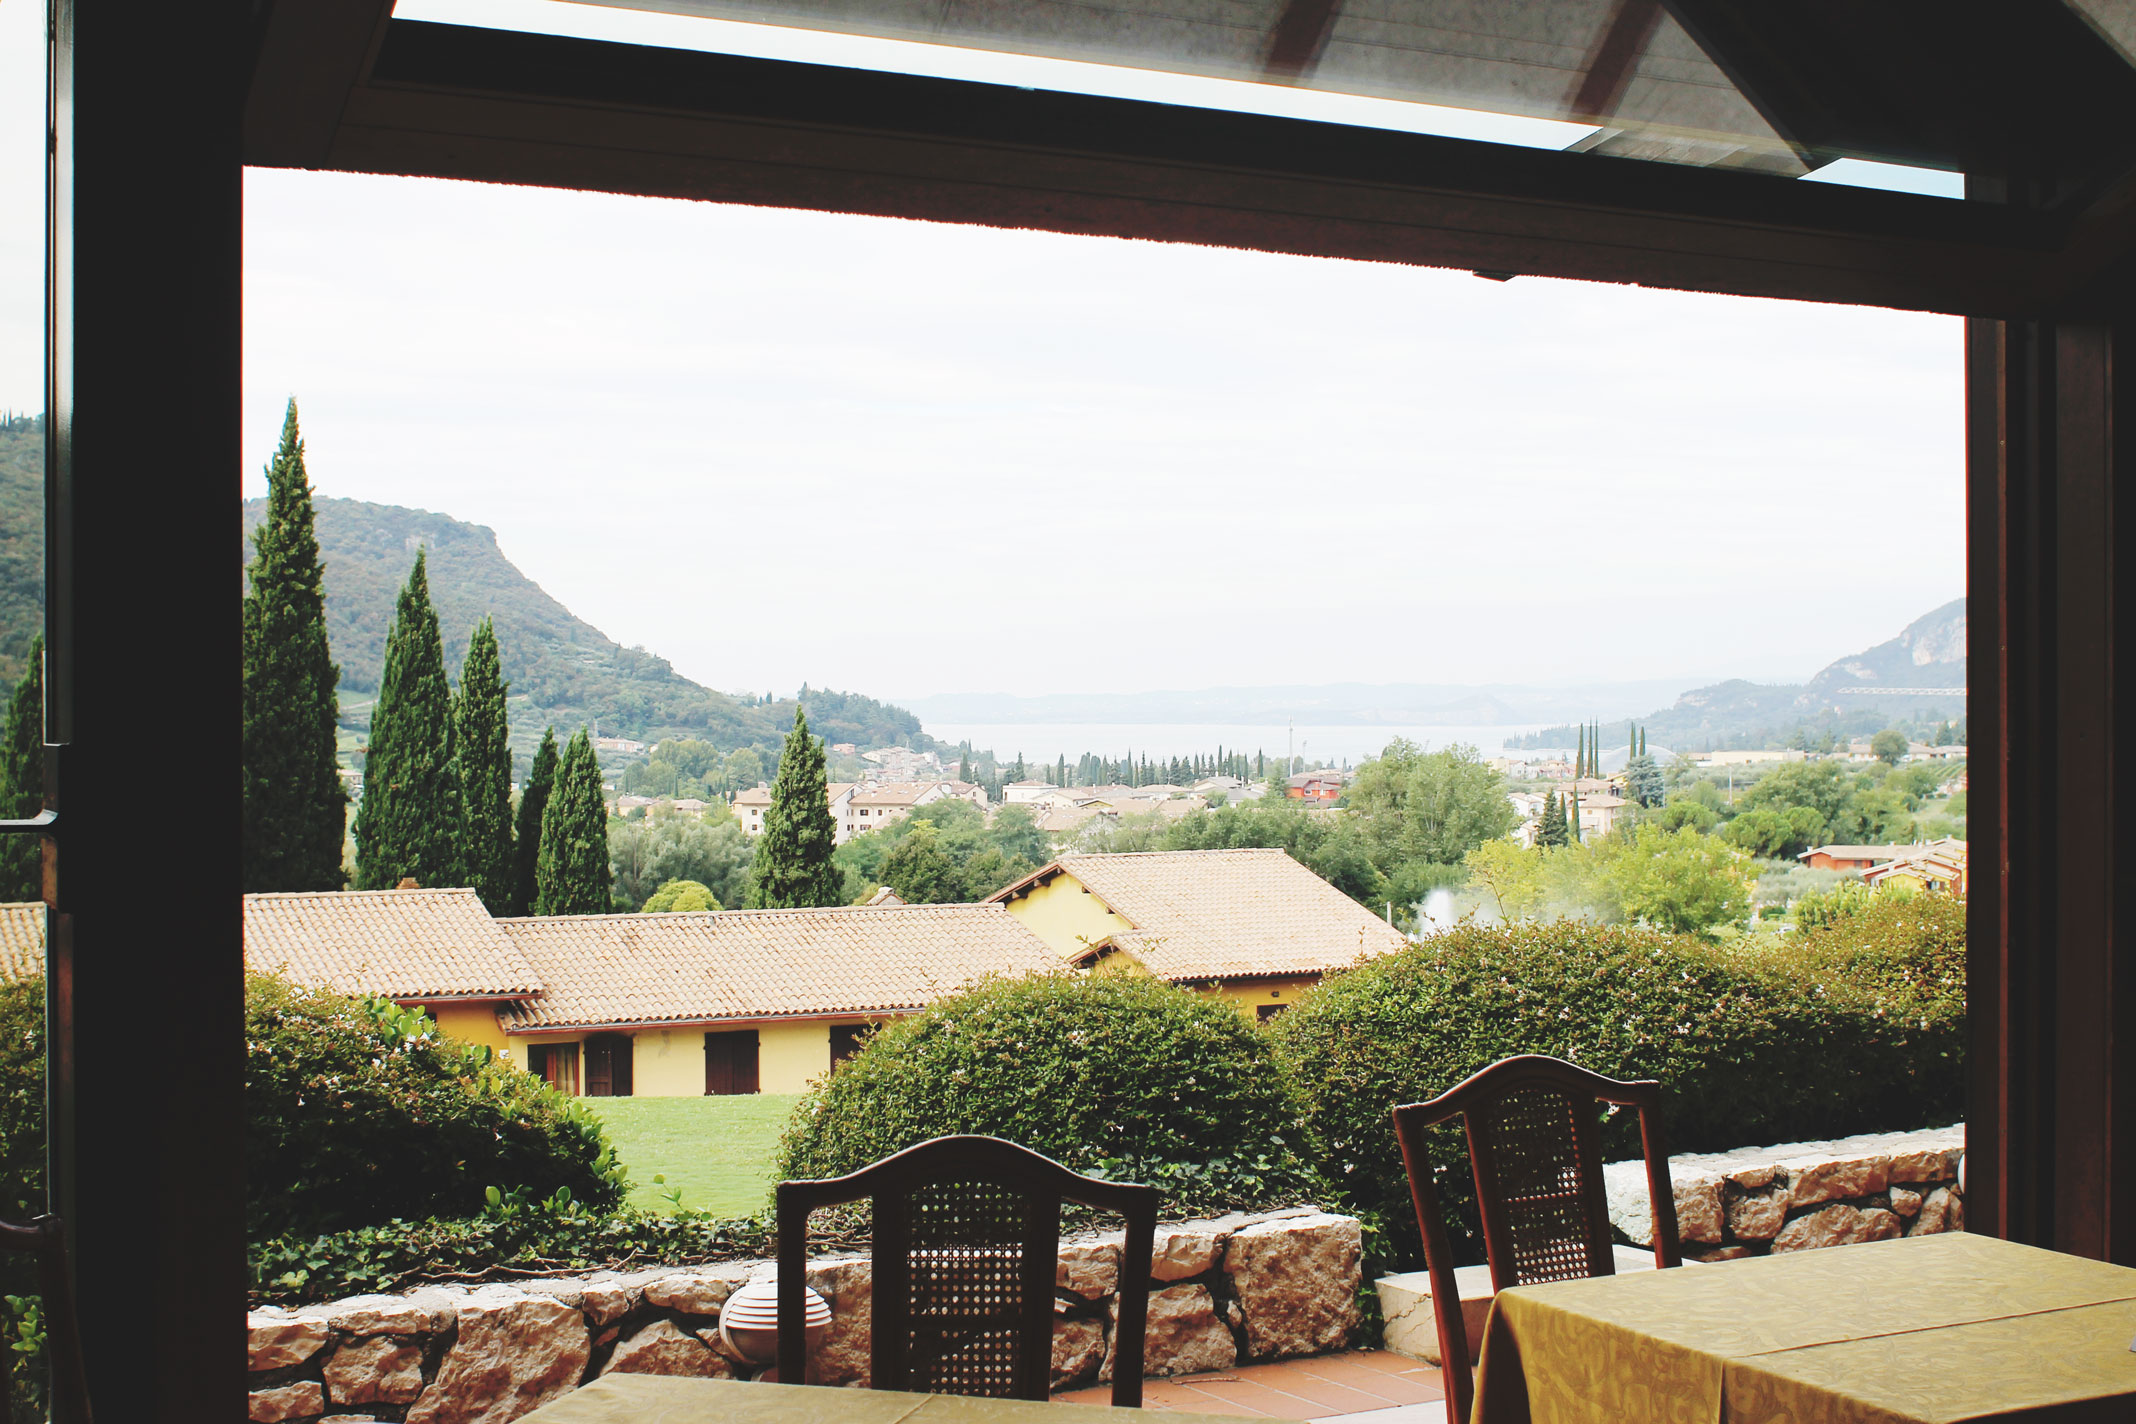 Styleat30 Travel Blog - Poiano Resort Hotel Review - Lake Garda Holiday - Italy Travel Guide 18